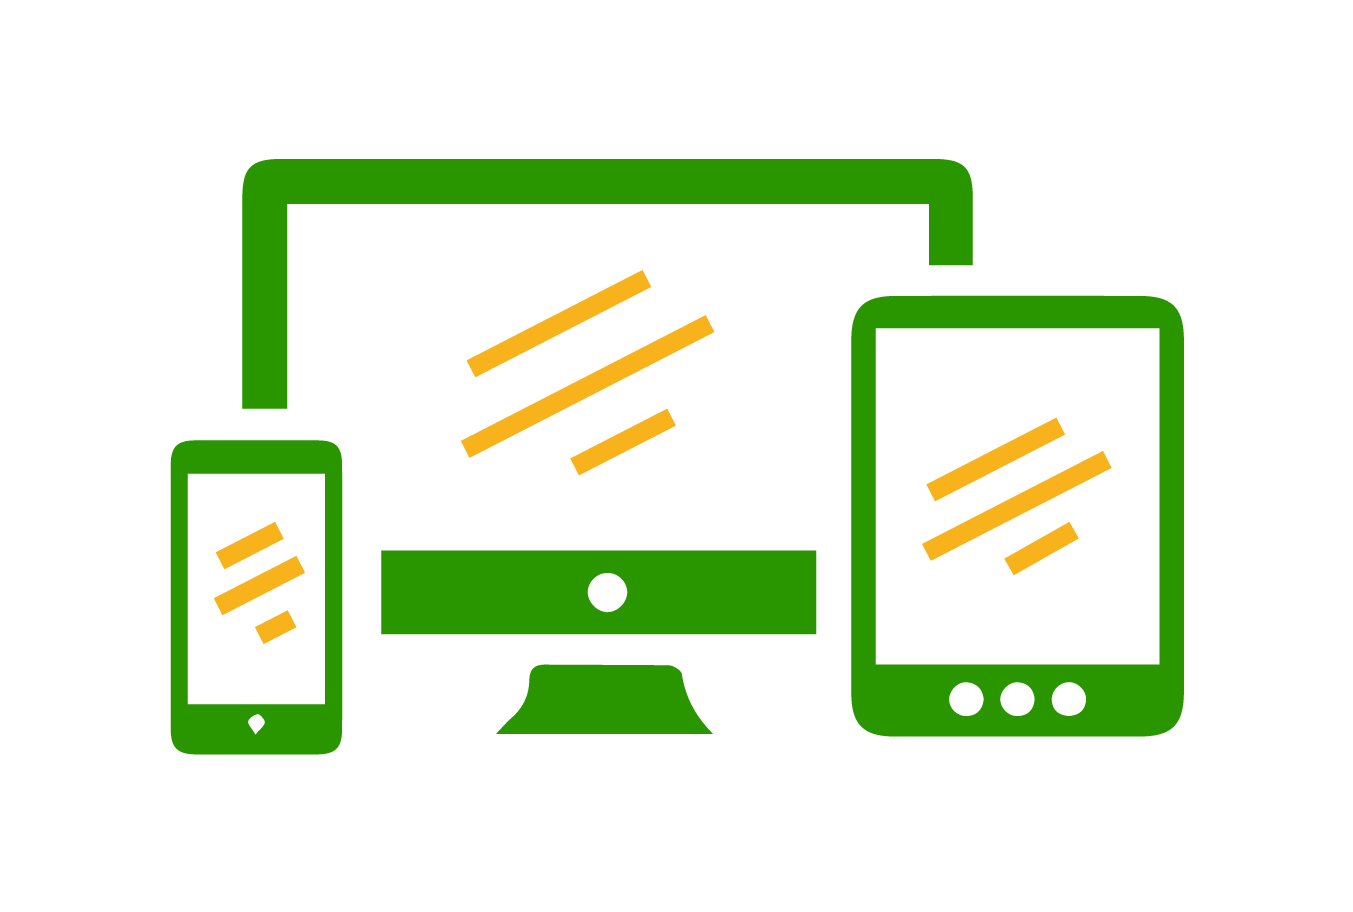 Responsive design across desktop, mobile, and tablet